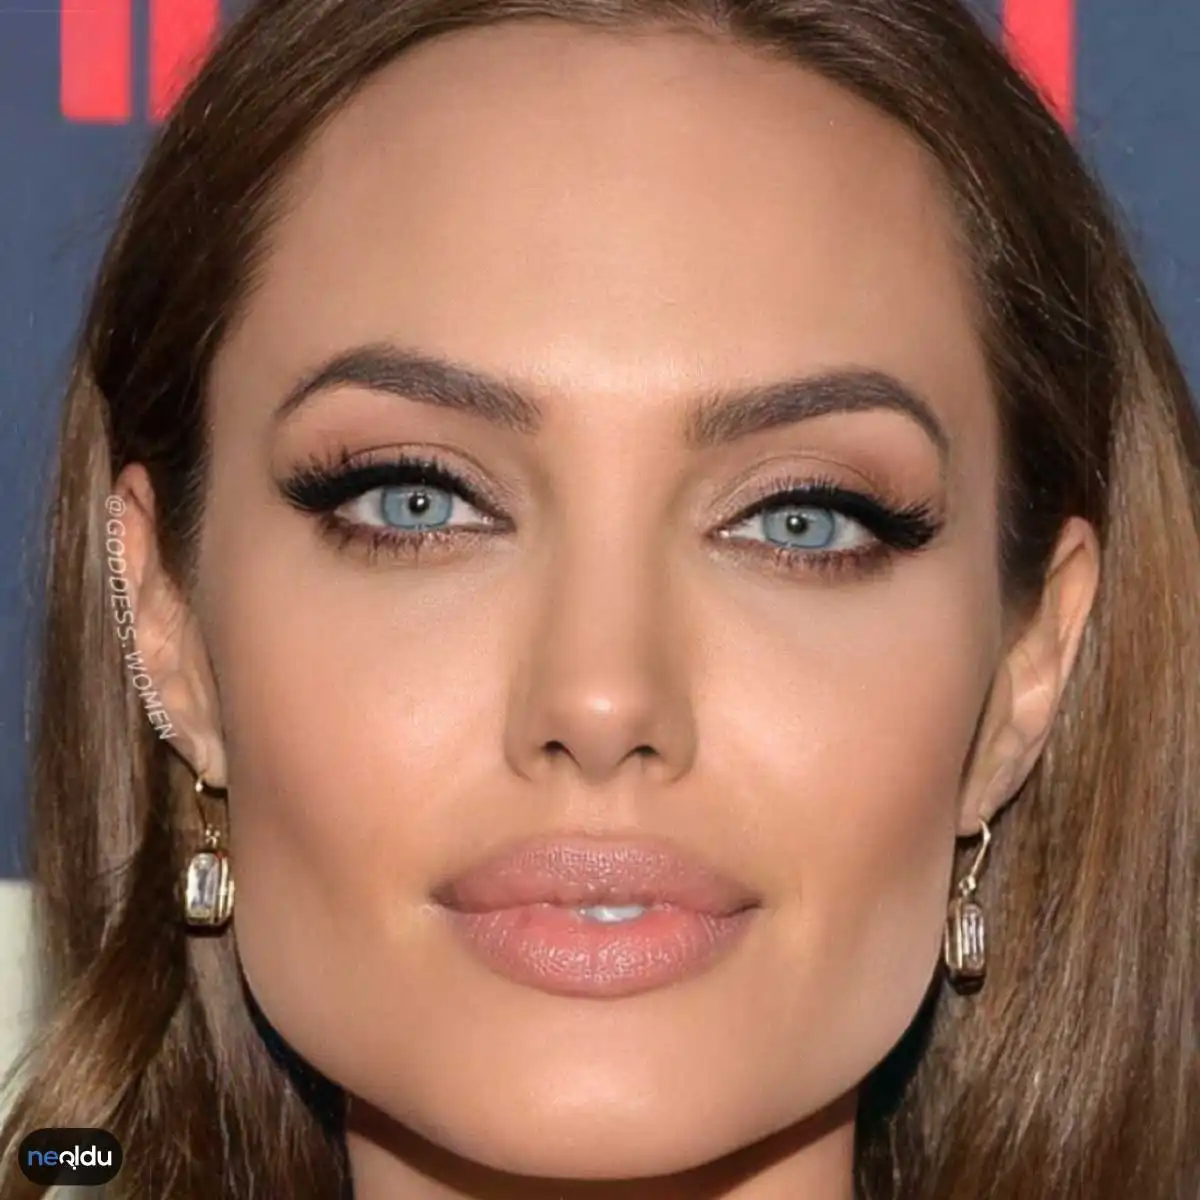 Angelina Jolie Makyajı